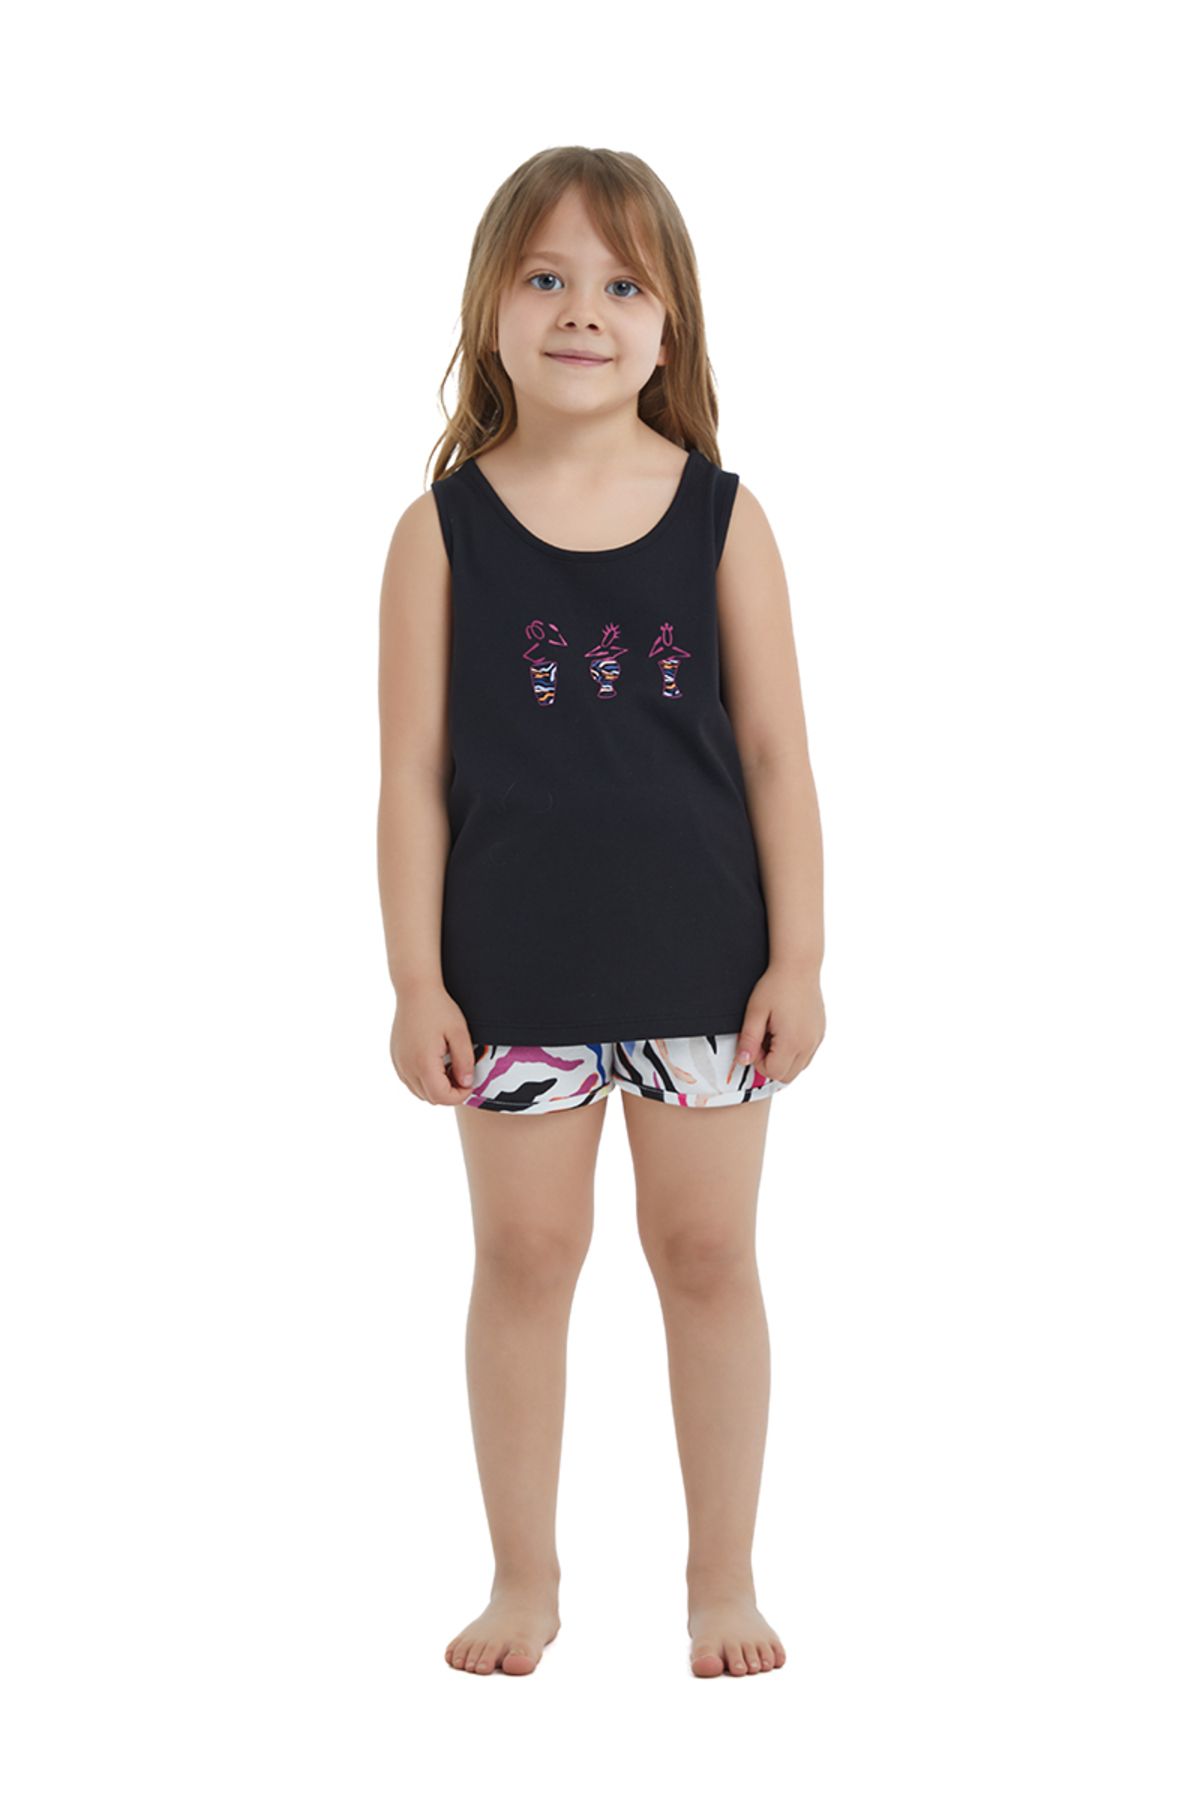 Blackspade Kız Çocuk Pijama Takımı 60444 - Siyah